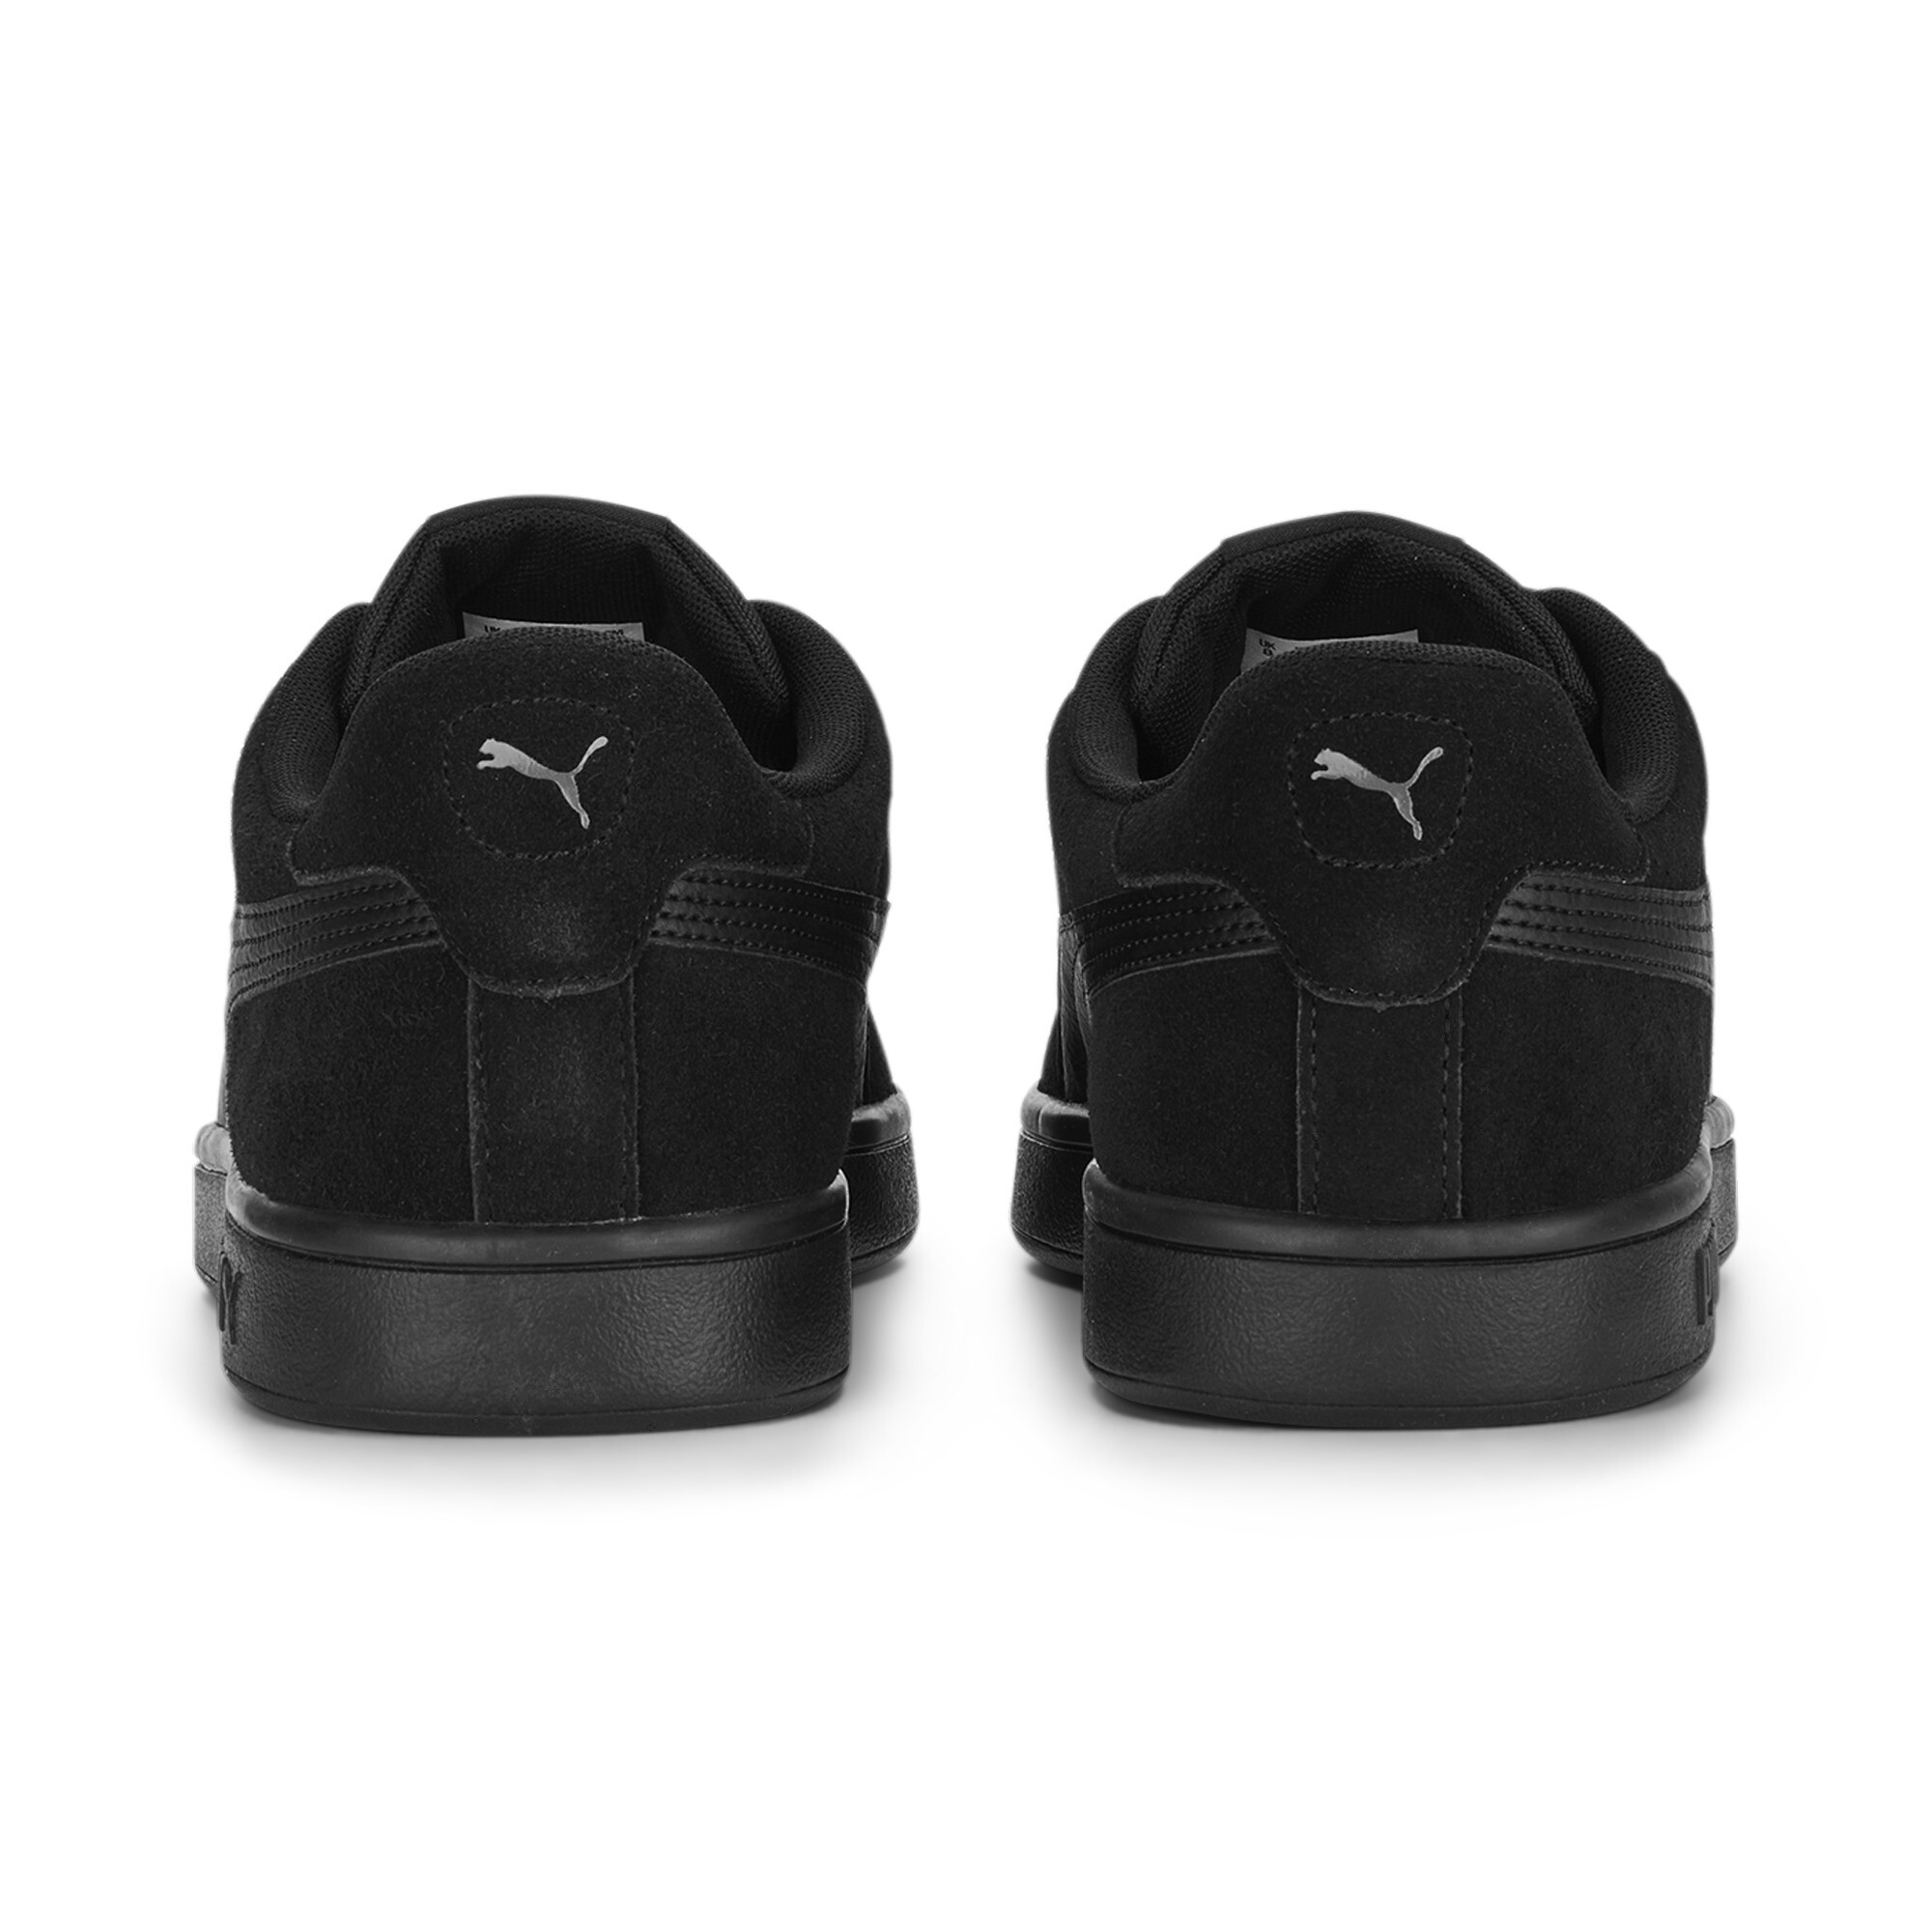 Puma Smash 3.0 Sneakers, Black, Size 44.5, Shoes